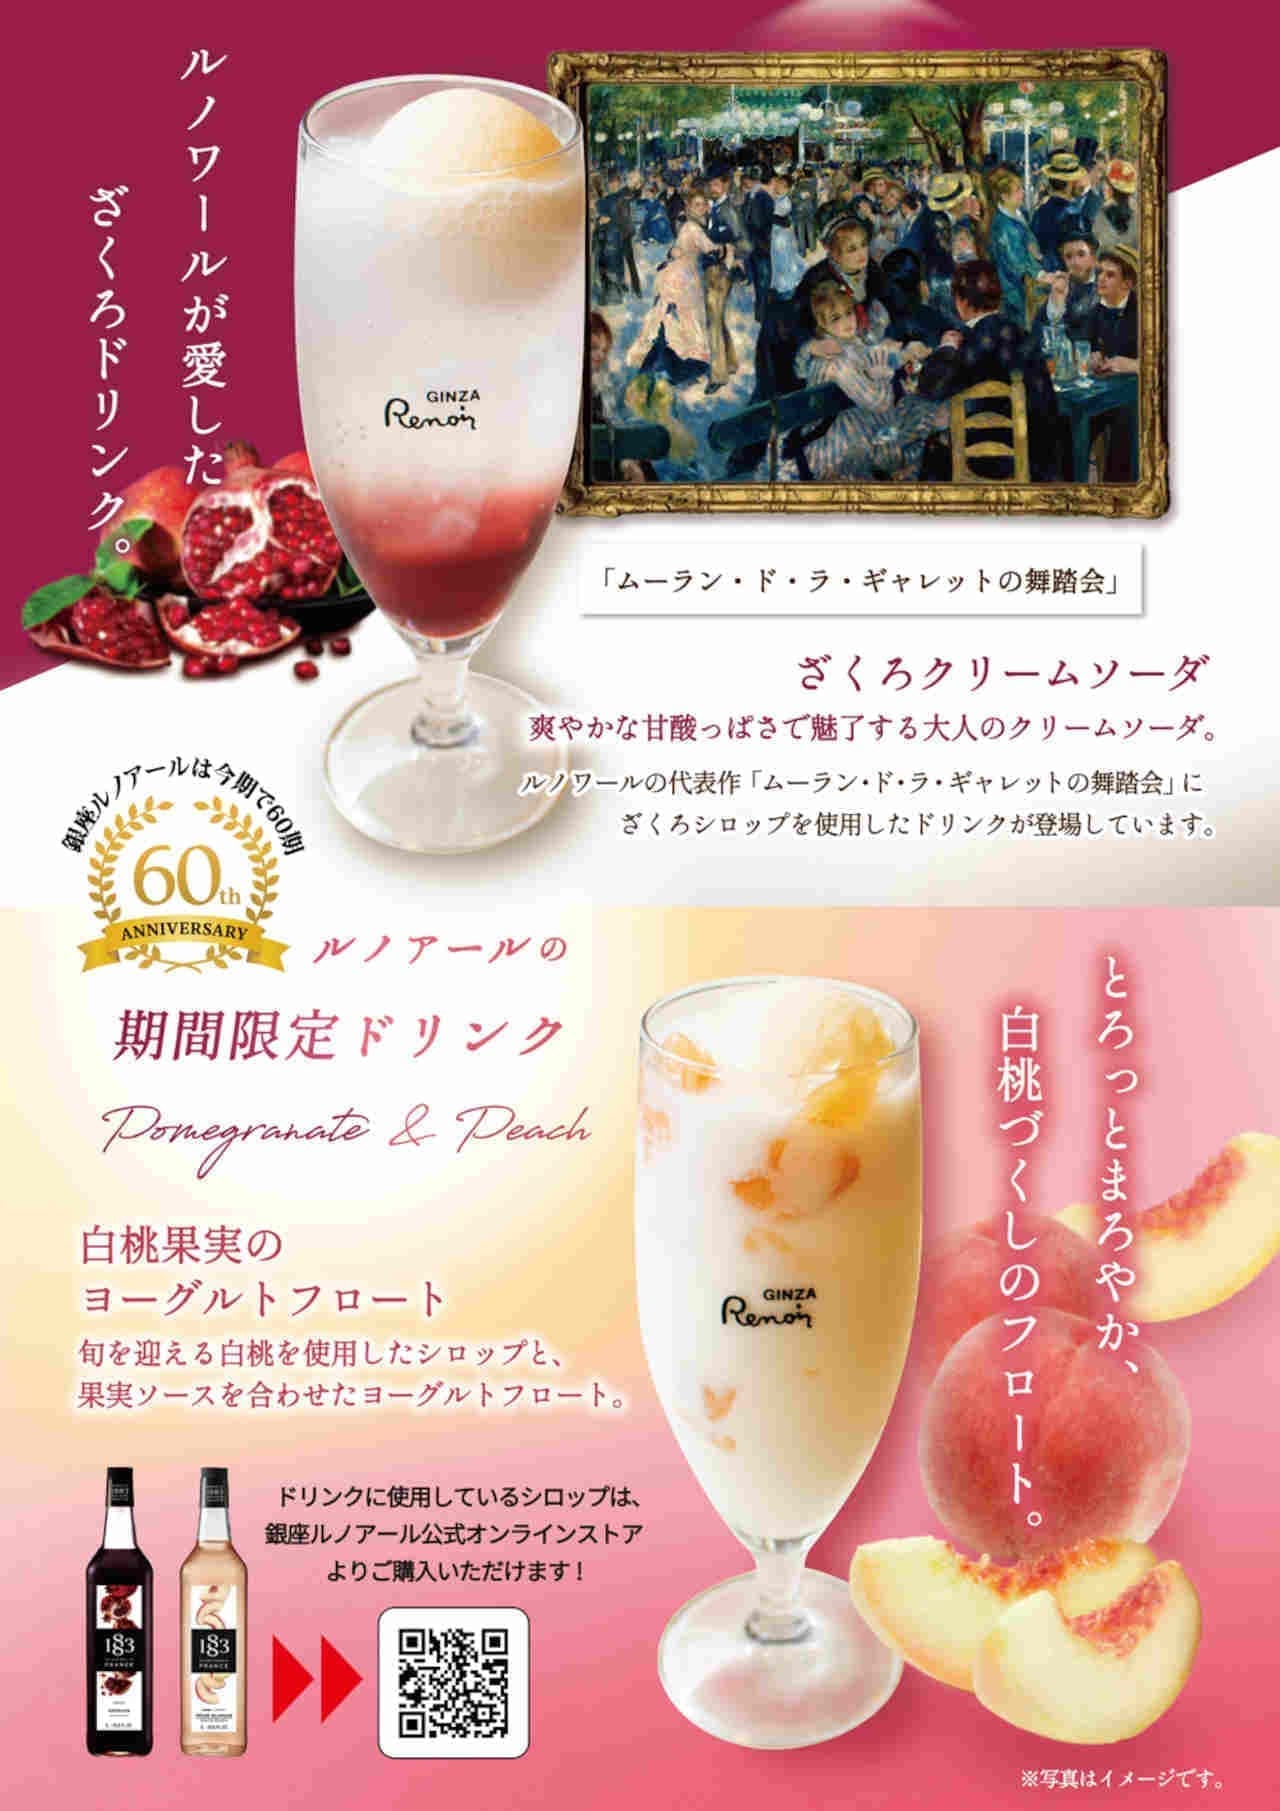 Café Lenoir "Pomegranate Cream Soda" and "White Peach Fruit Yogurt Float".